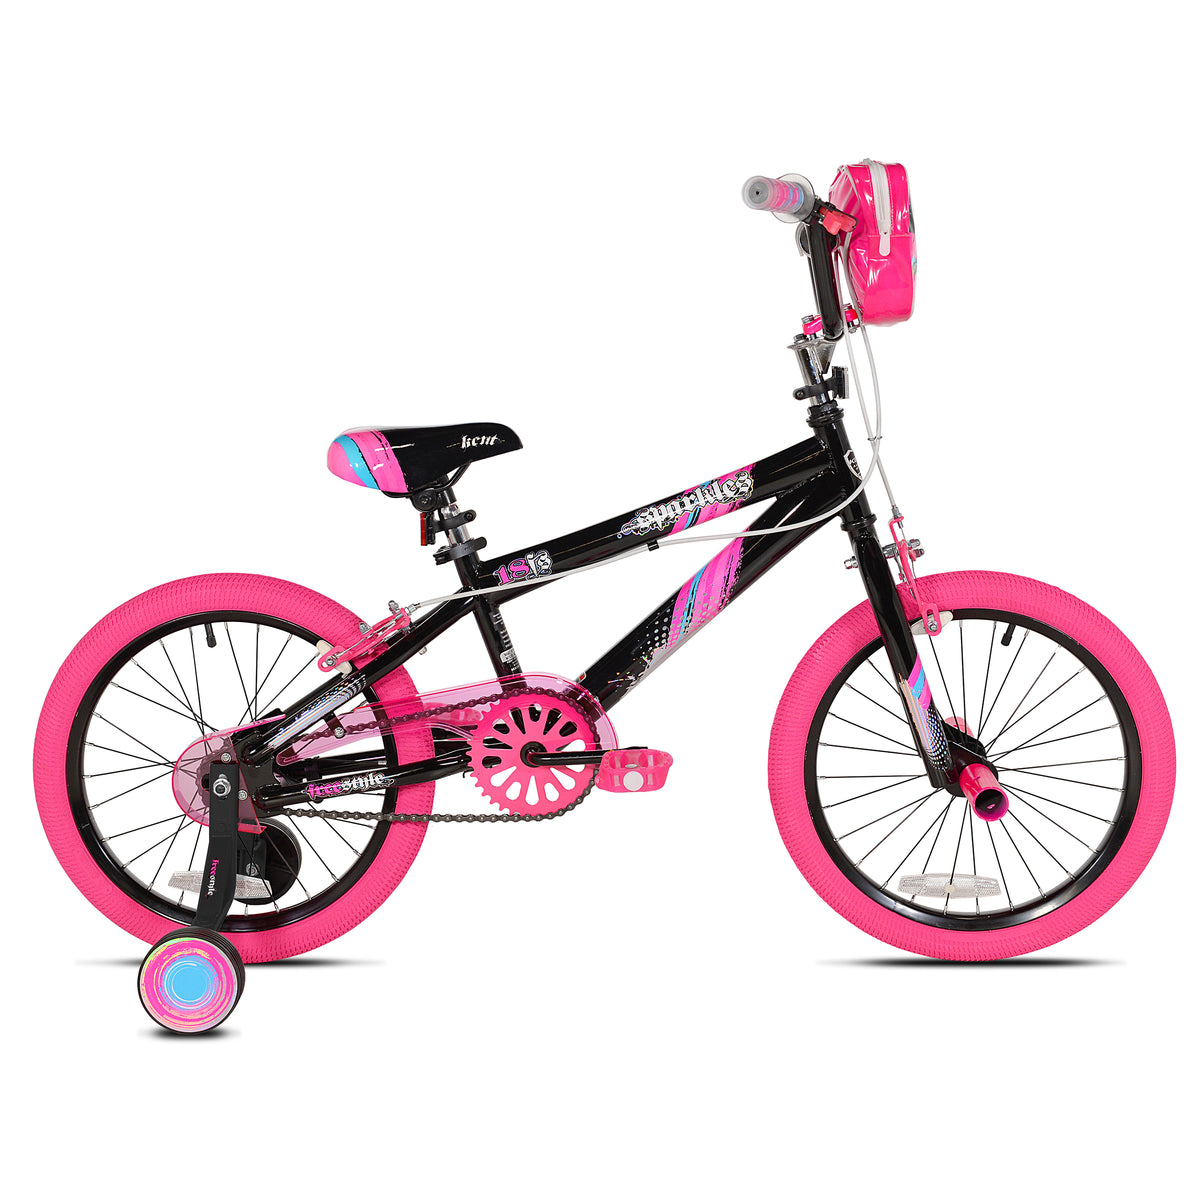 18" Kent Sparkles | BMX Bike for Kids Ages 5-8